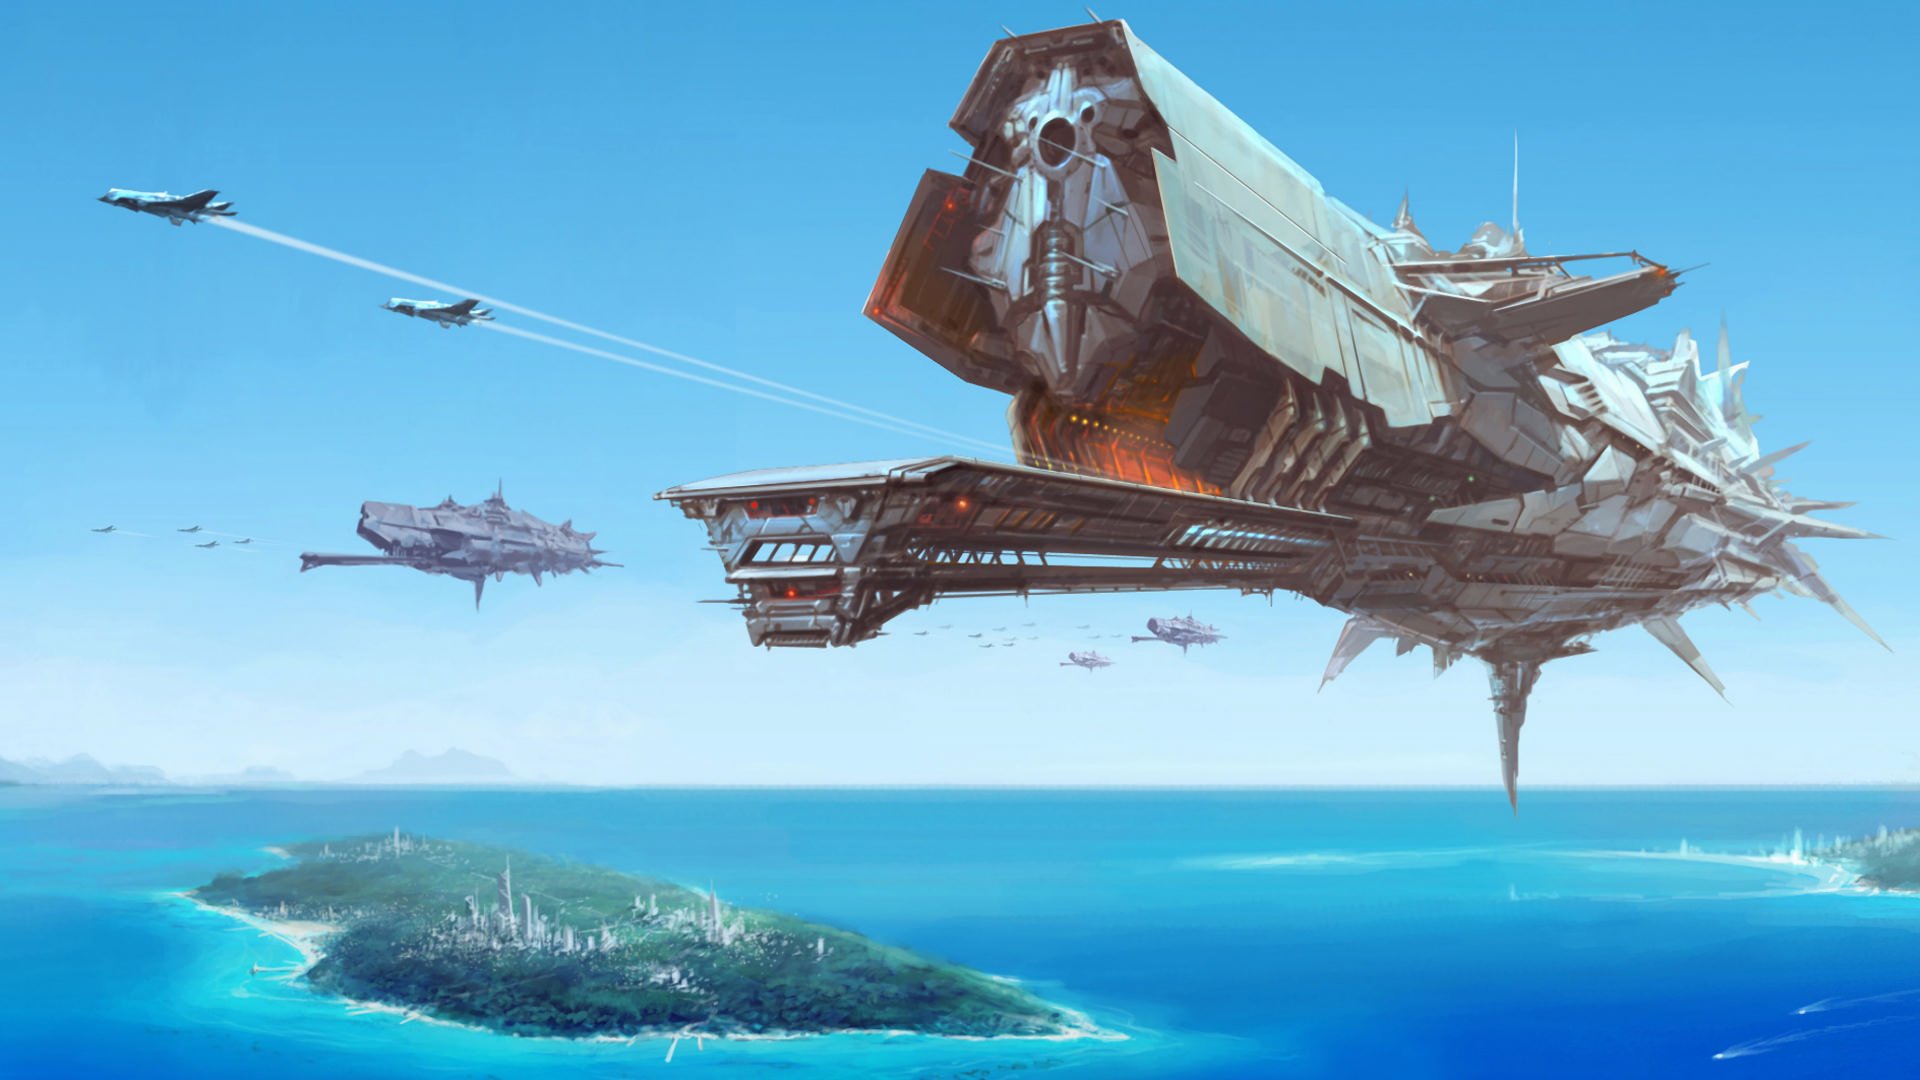 48+] Sci Fi Ships Wallpaper - WallpaperSafari